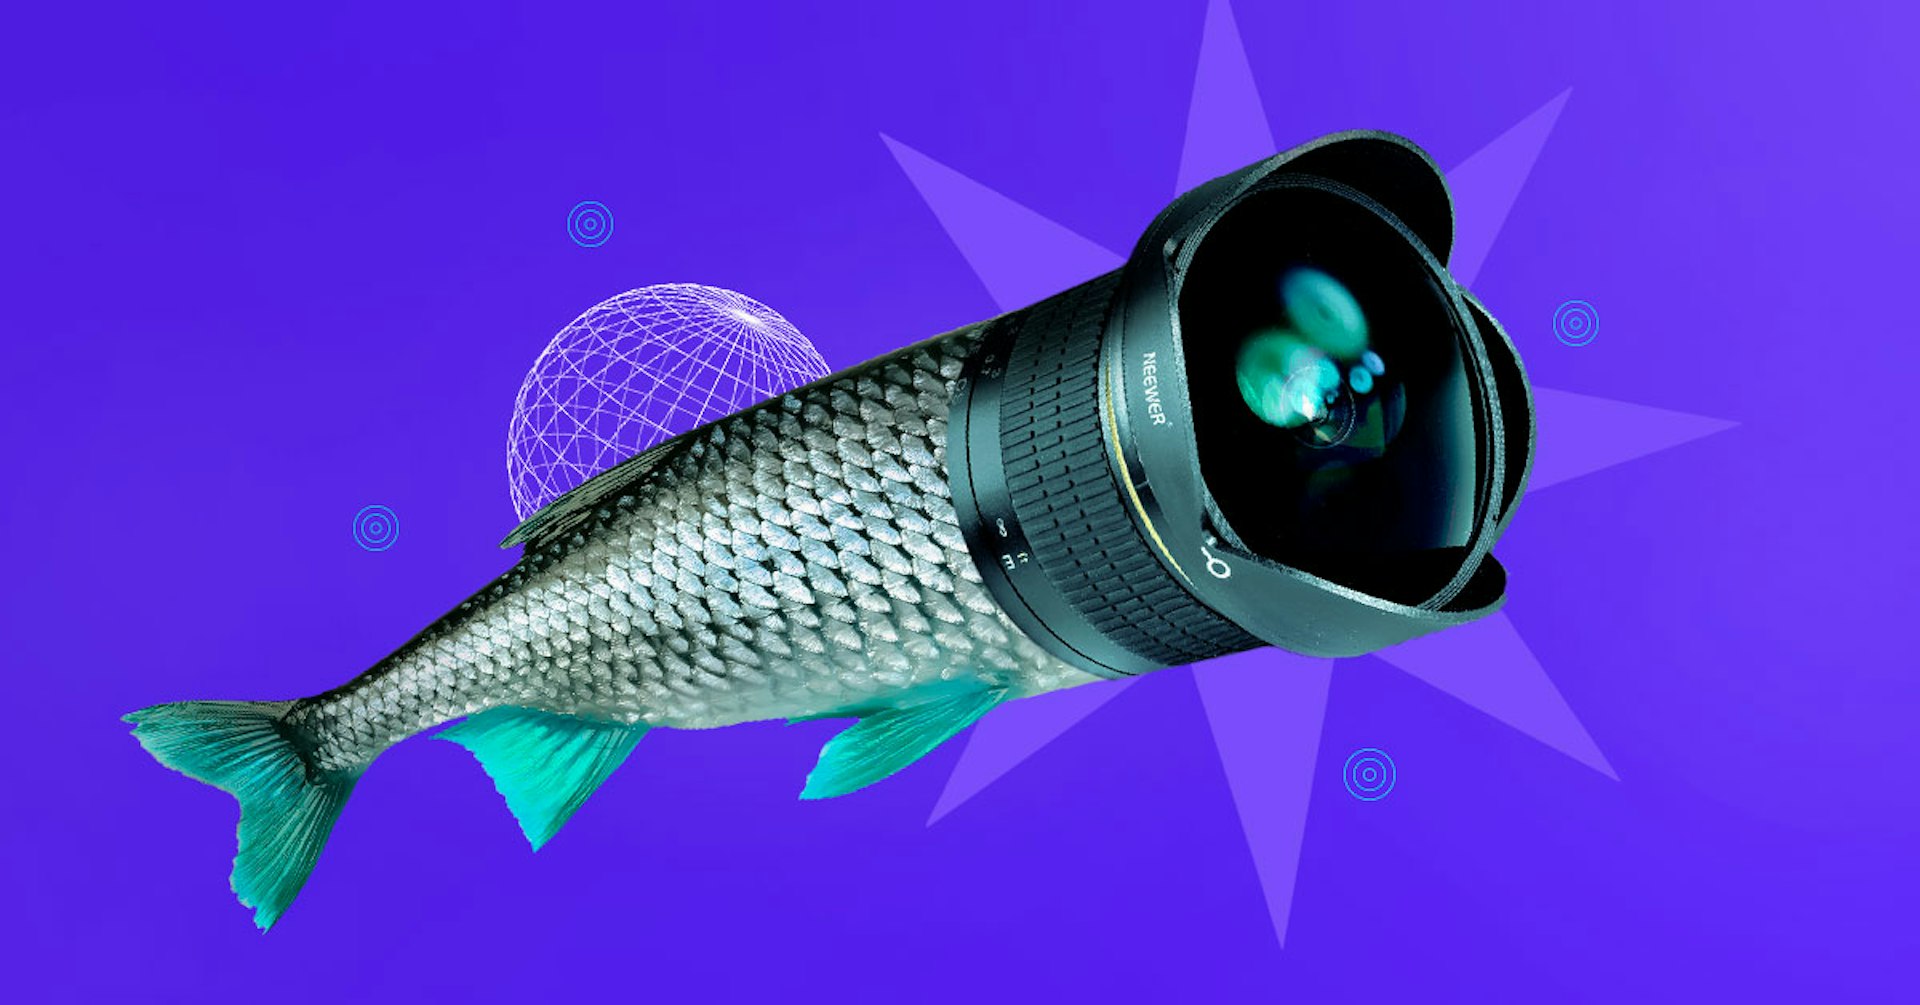 Lente ojo de pez: Ideas insuperables para sacar las mejores fotos